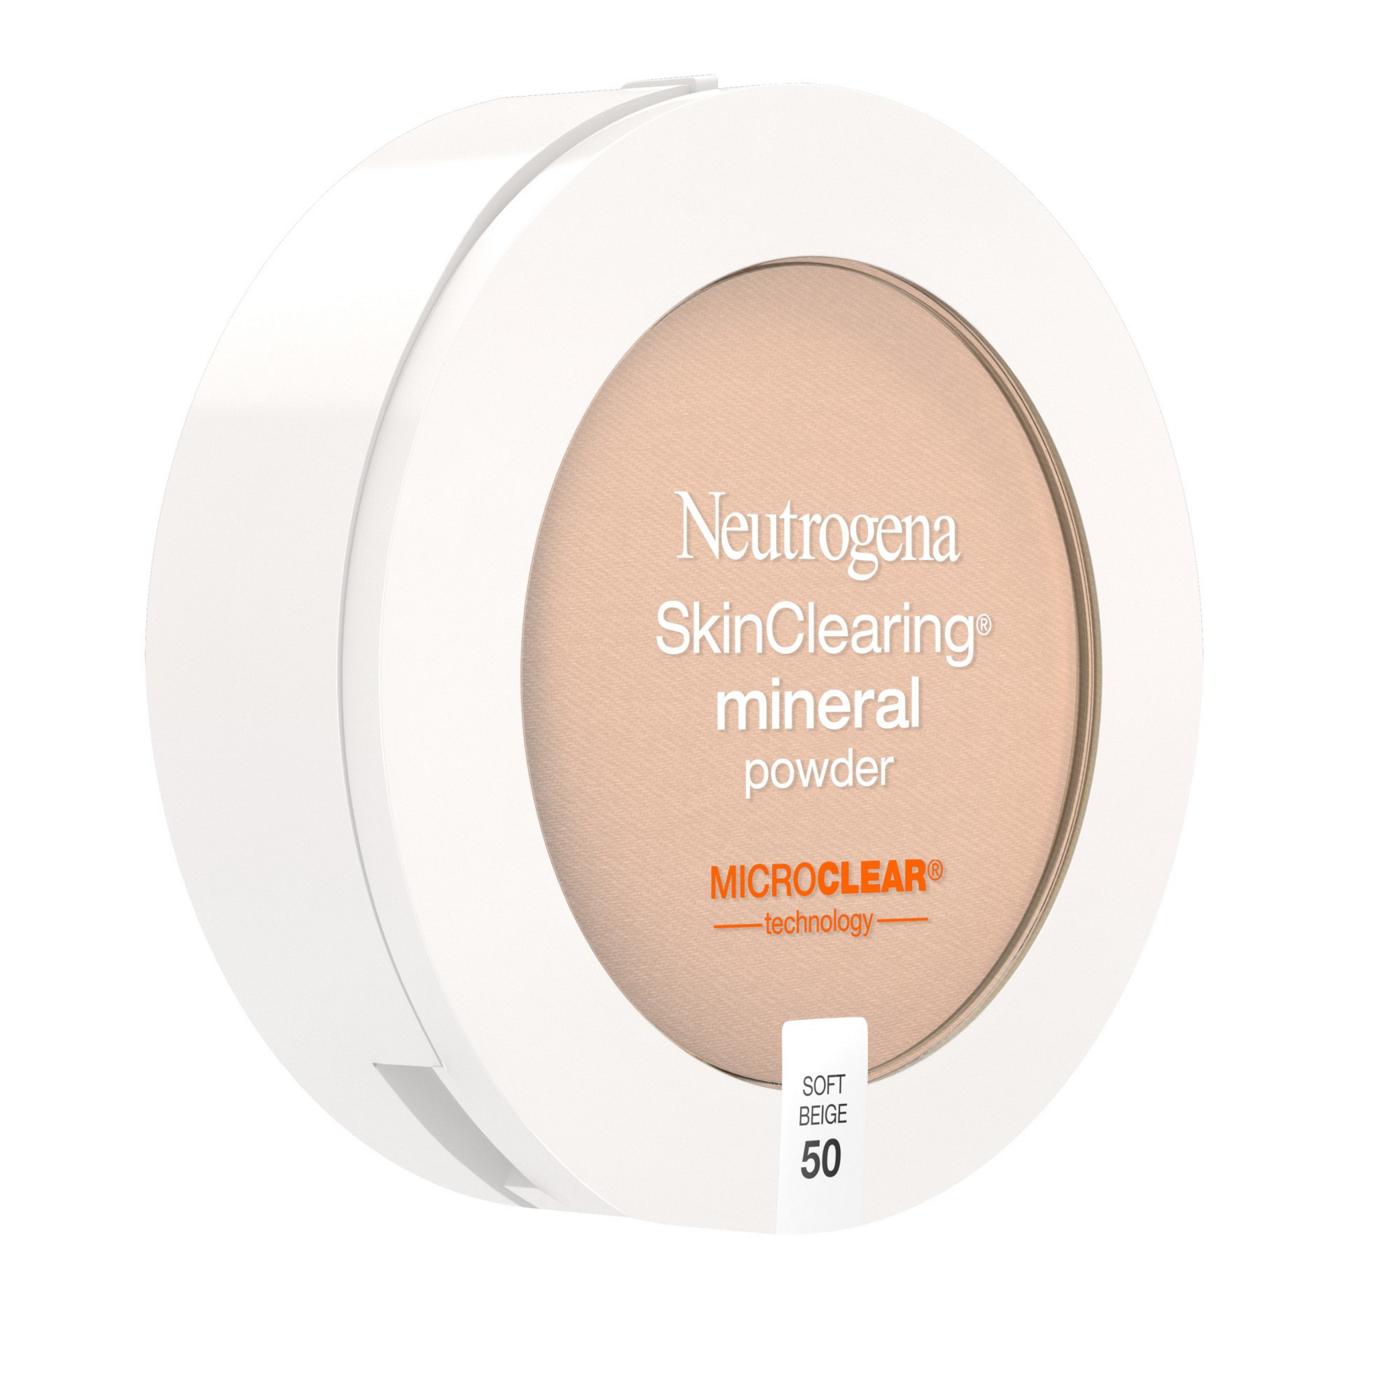 Neutrogena Skinclearing Mineral Powder 50 Soft Beige; image 5 of 5